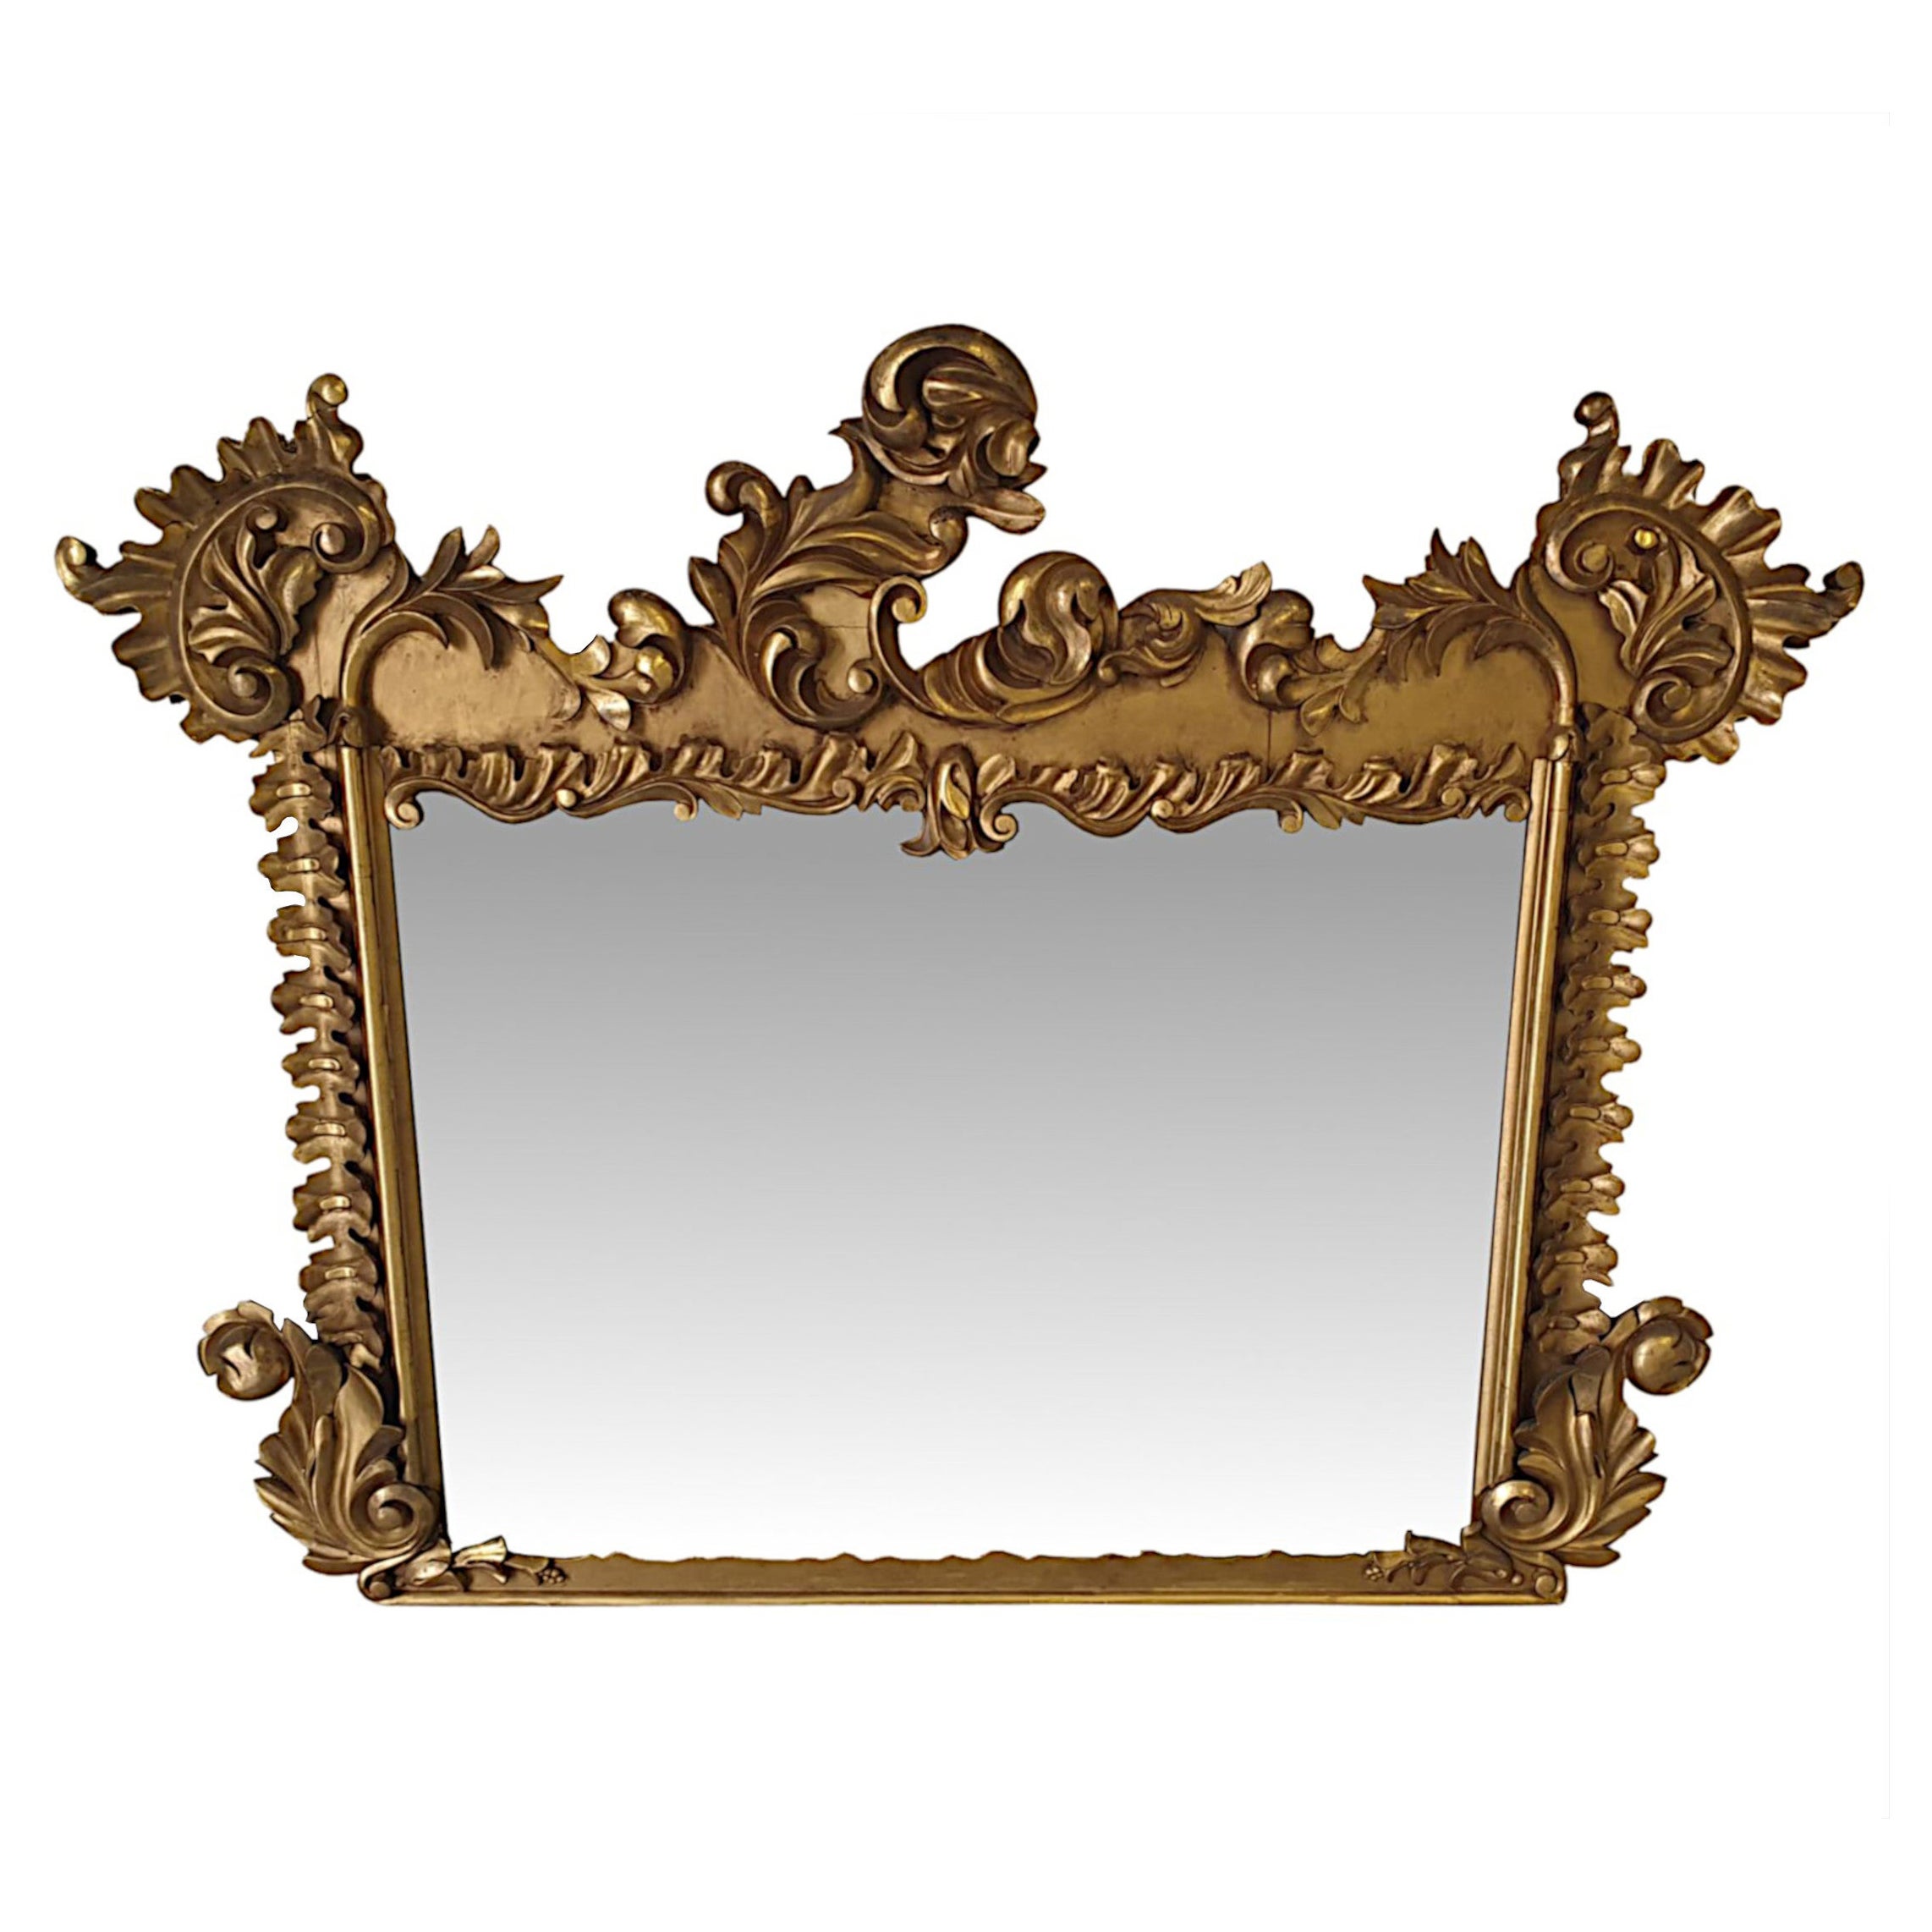 Very Fine Early 19th Century Irish William IV Giltwood Overmantle Mirror